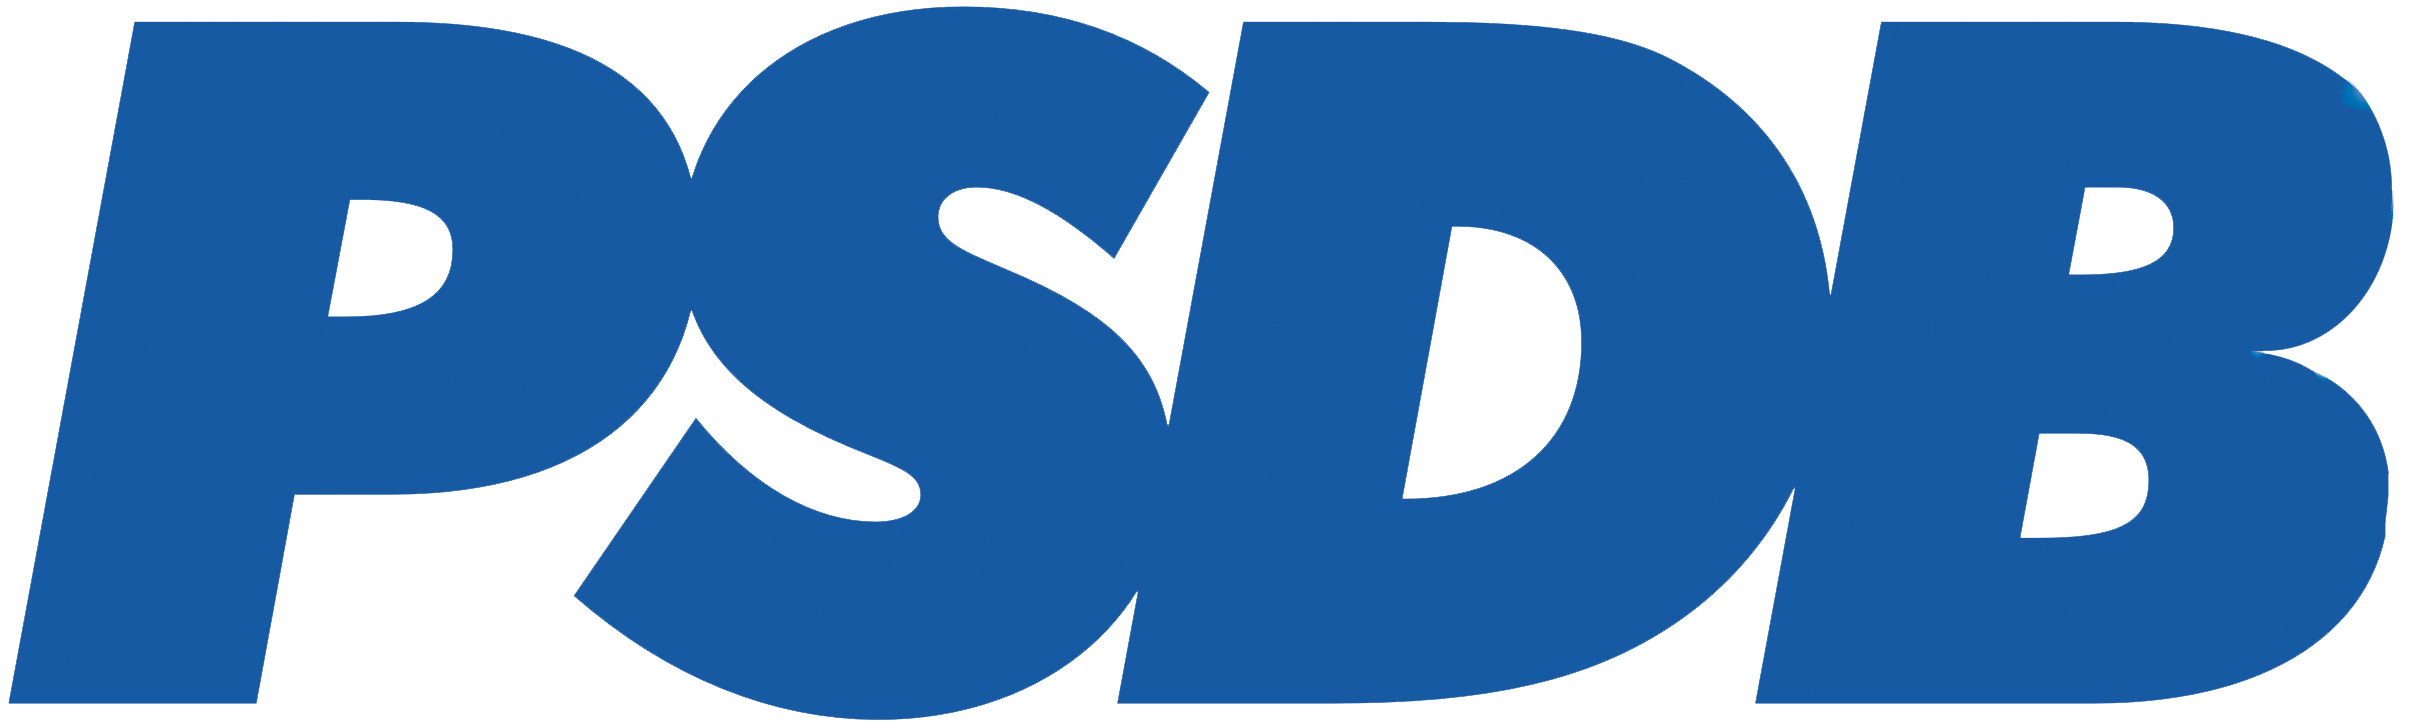 PSDB-Partido da Social Democracia Brasileira